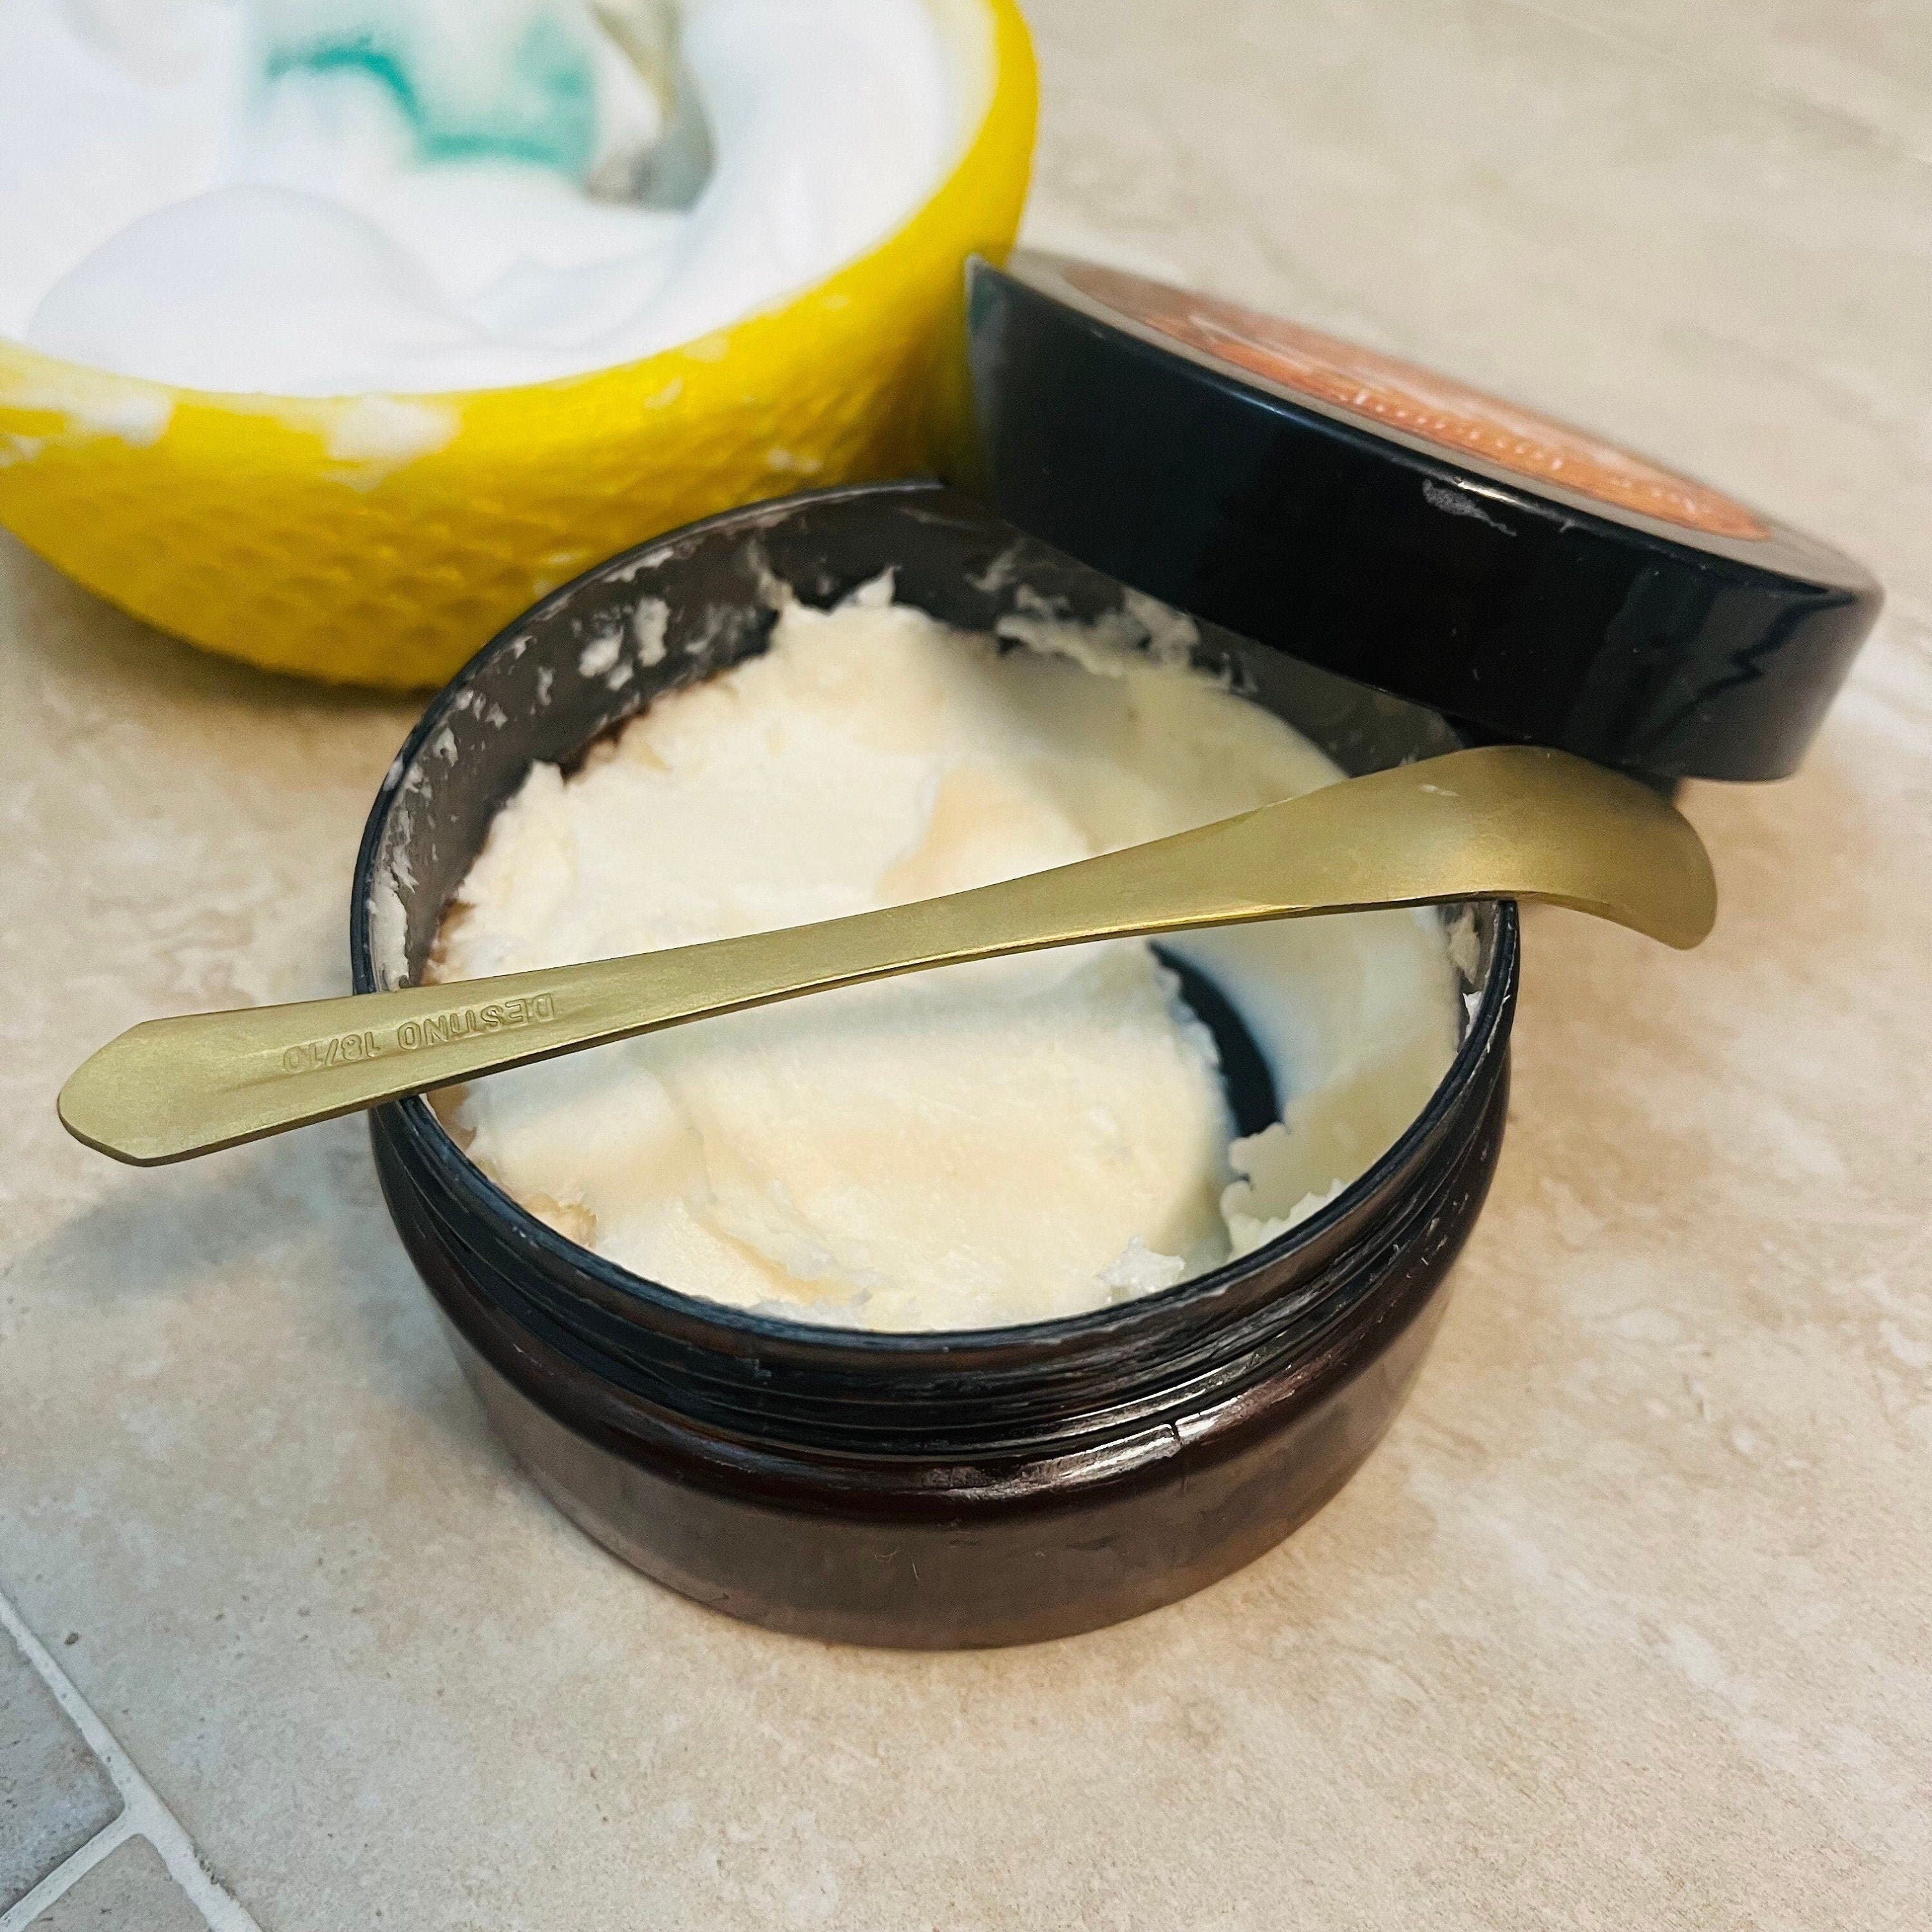 Sleek Lather Bowl - Practical and Eco-Friendly Shave Mug